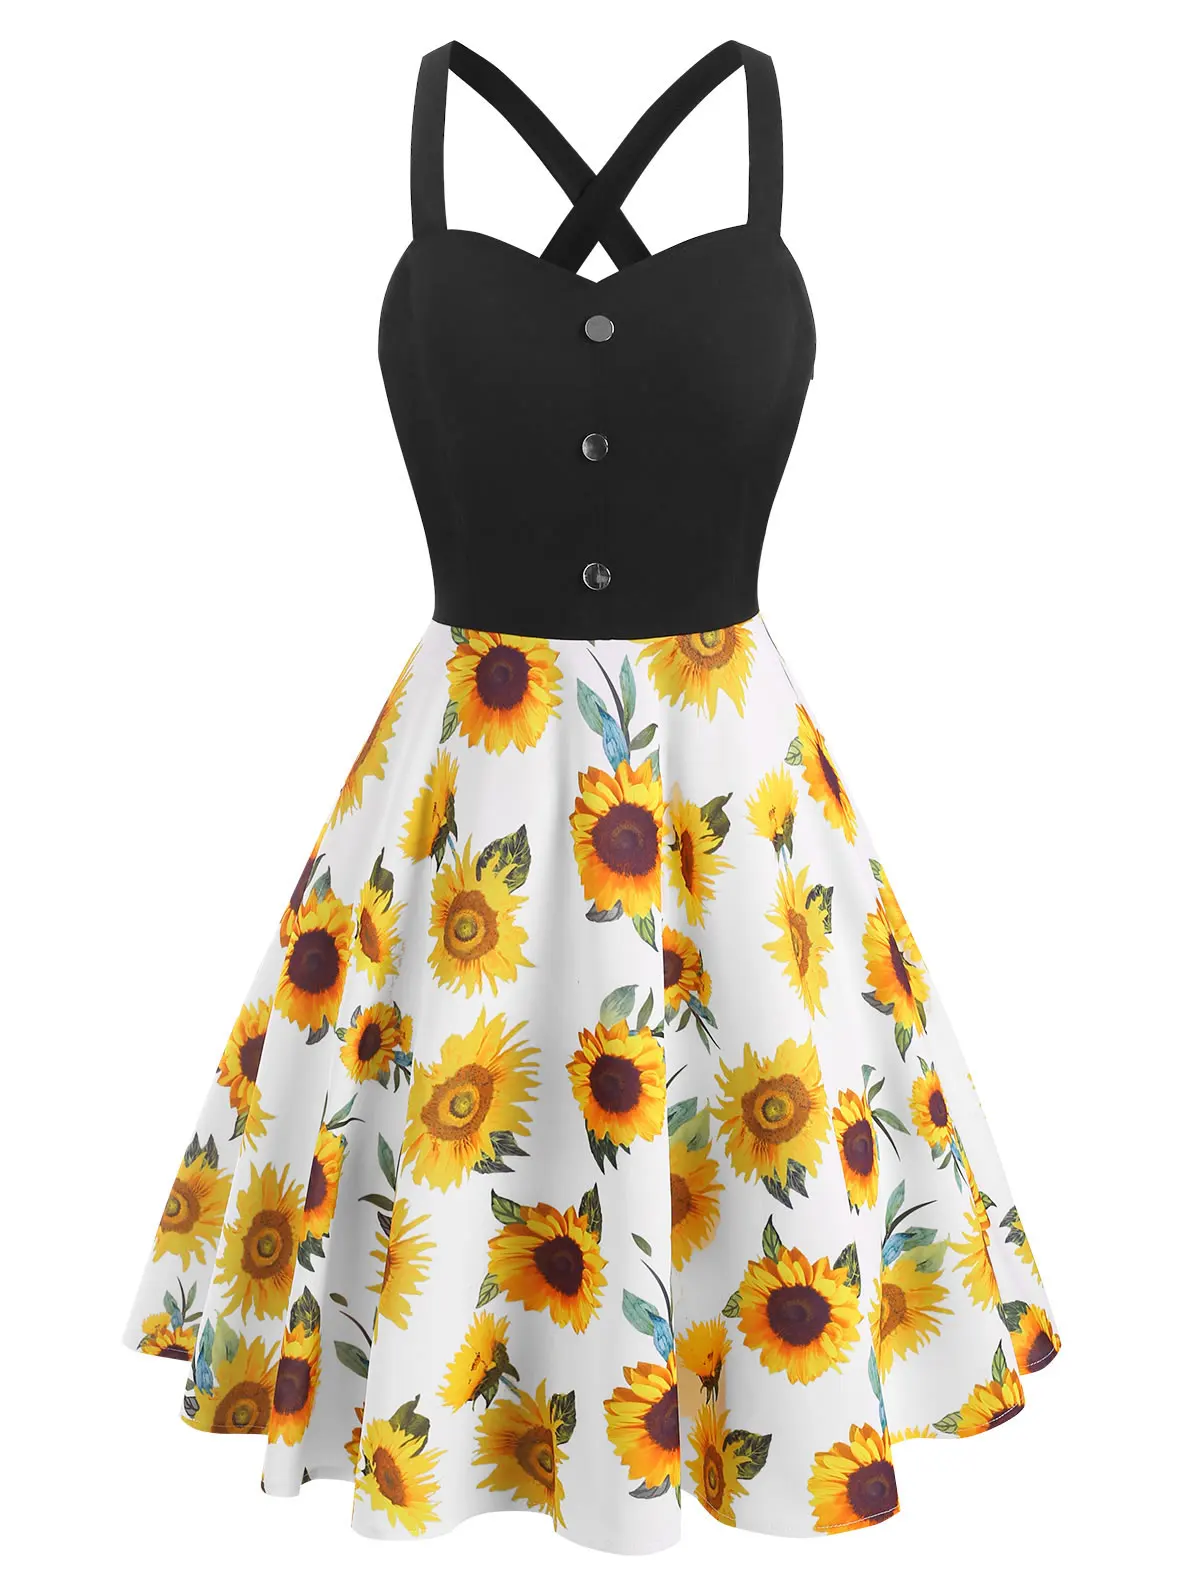 

Wipalo Casual Women Dress Sunflower Print Mock Button Criss Cross Dress Fashion Vacation Daily Sleeveless A-Line Party Dress